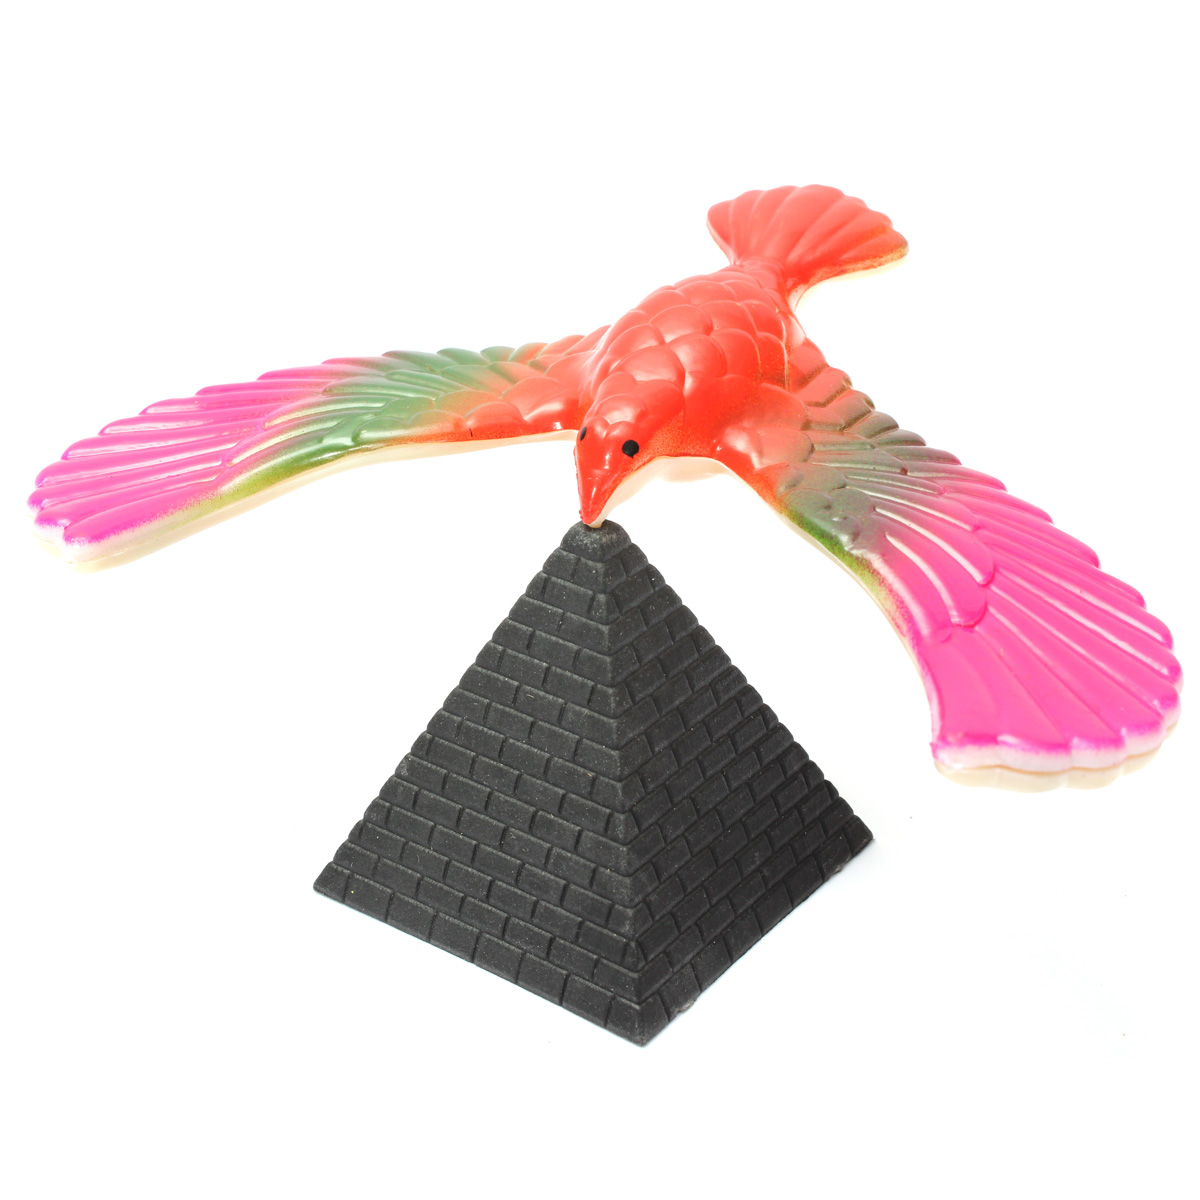 Magic-Balancing-Bird-Science-Desk-Fun-Learning-Gag-Gift-Novelties-Toys-1314694-1